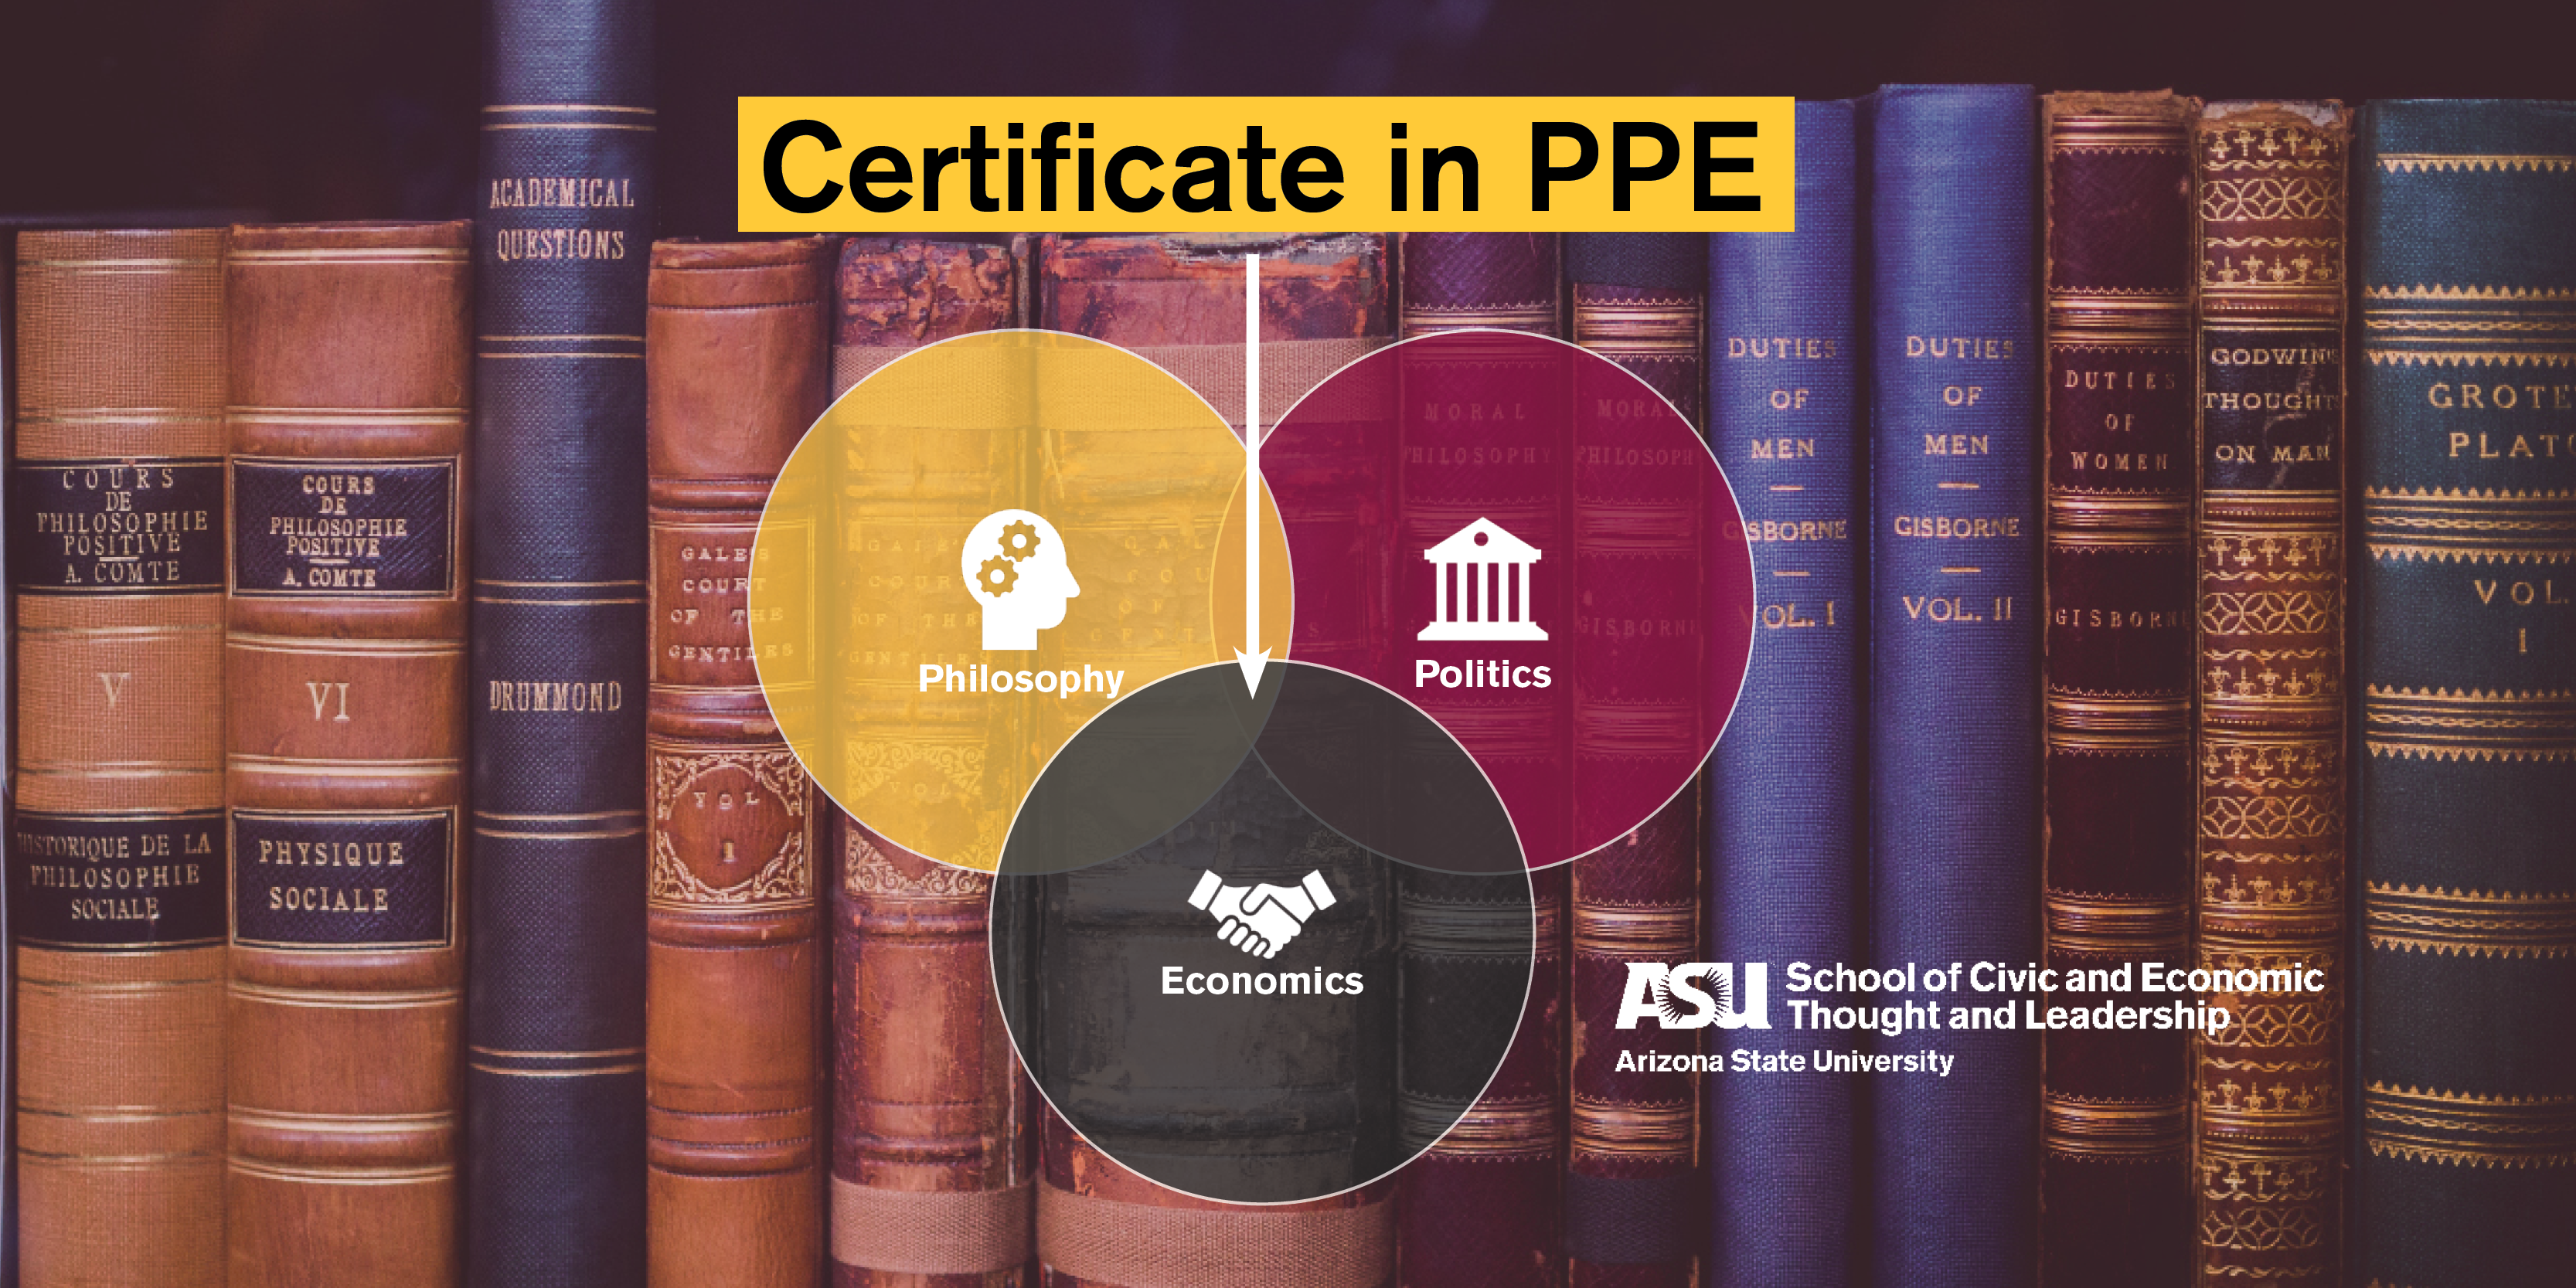 Certificate in Philosophy, Politics and Economics